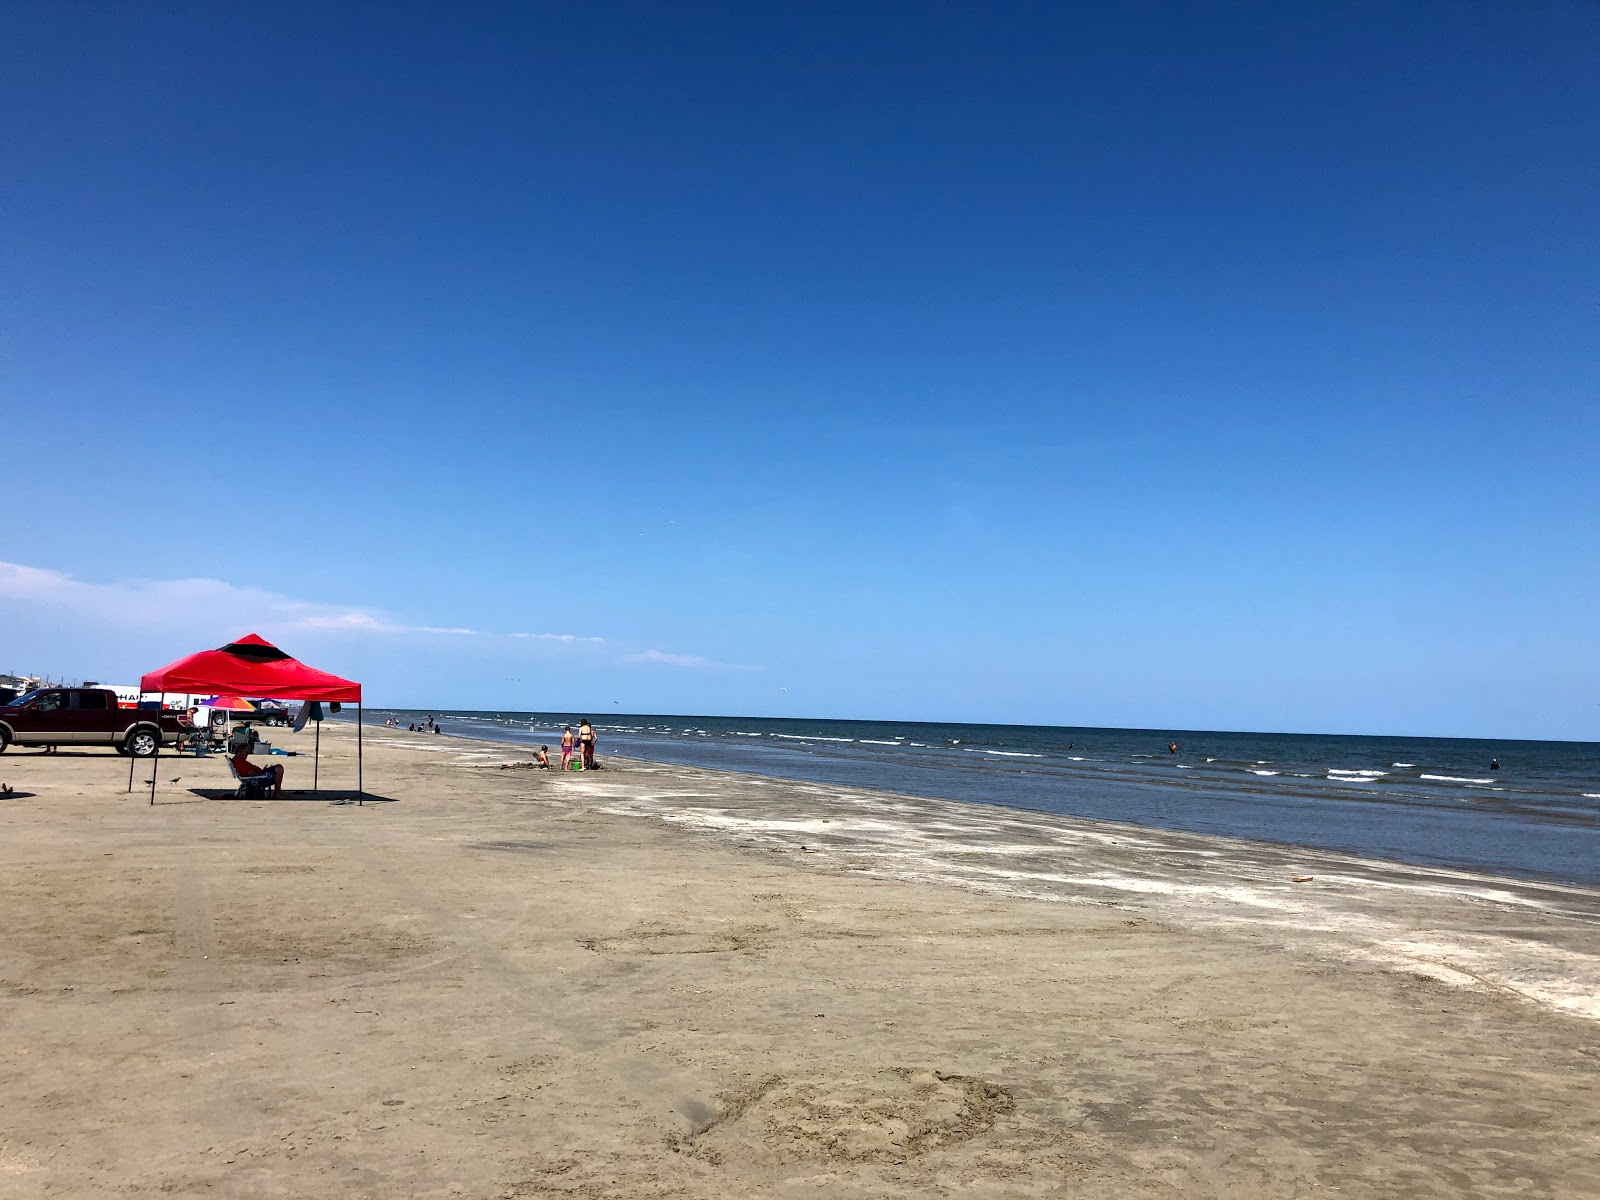 Foto di Salt Cedar Av. beach con una superficie del sabbia grigia